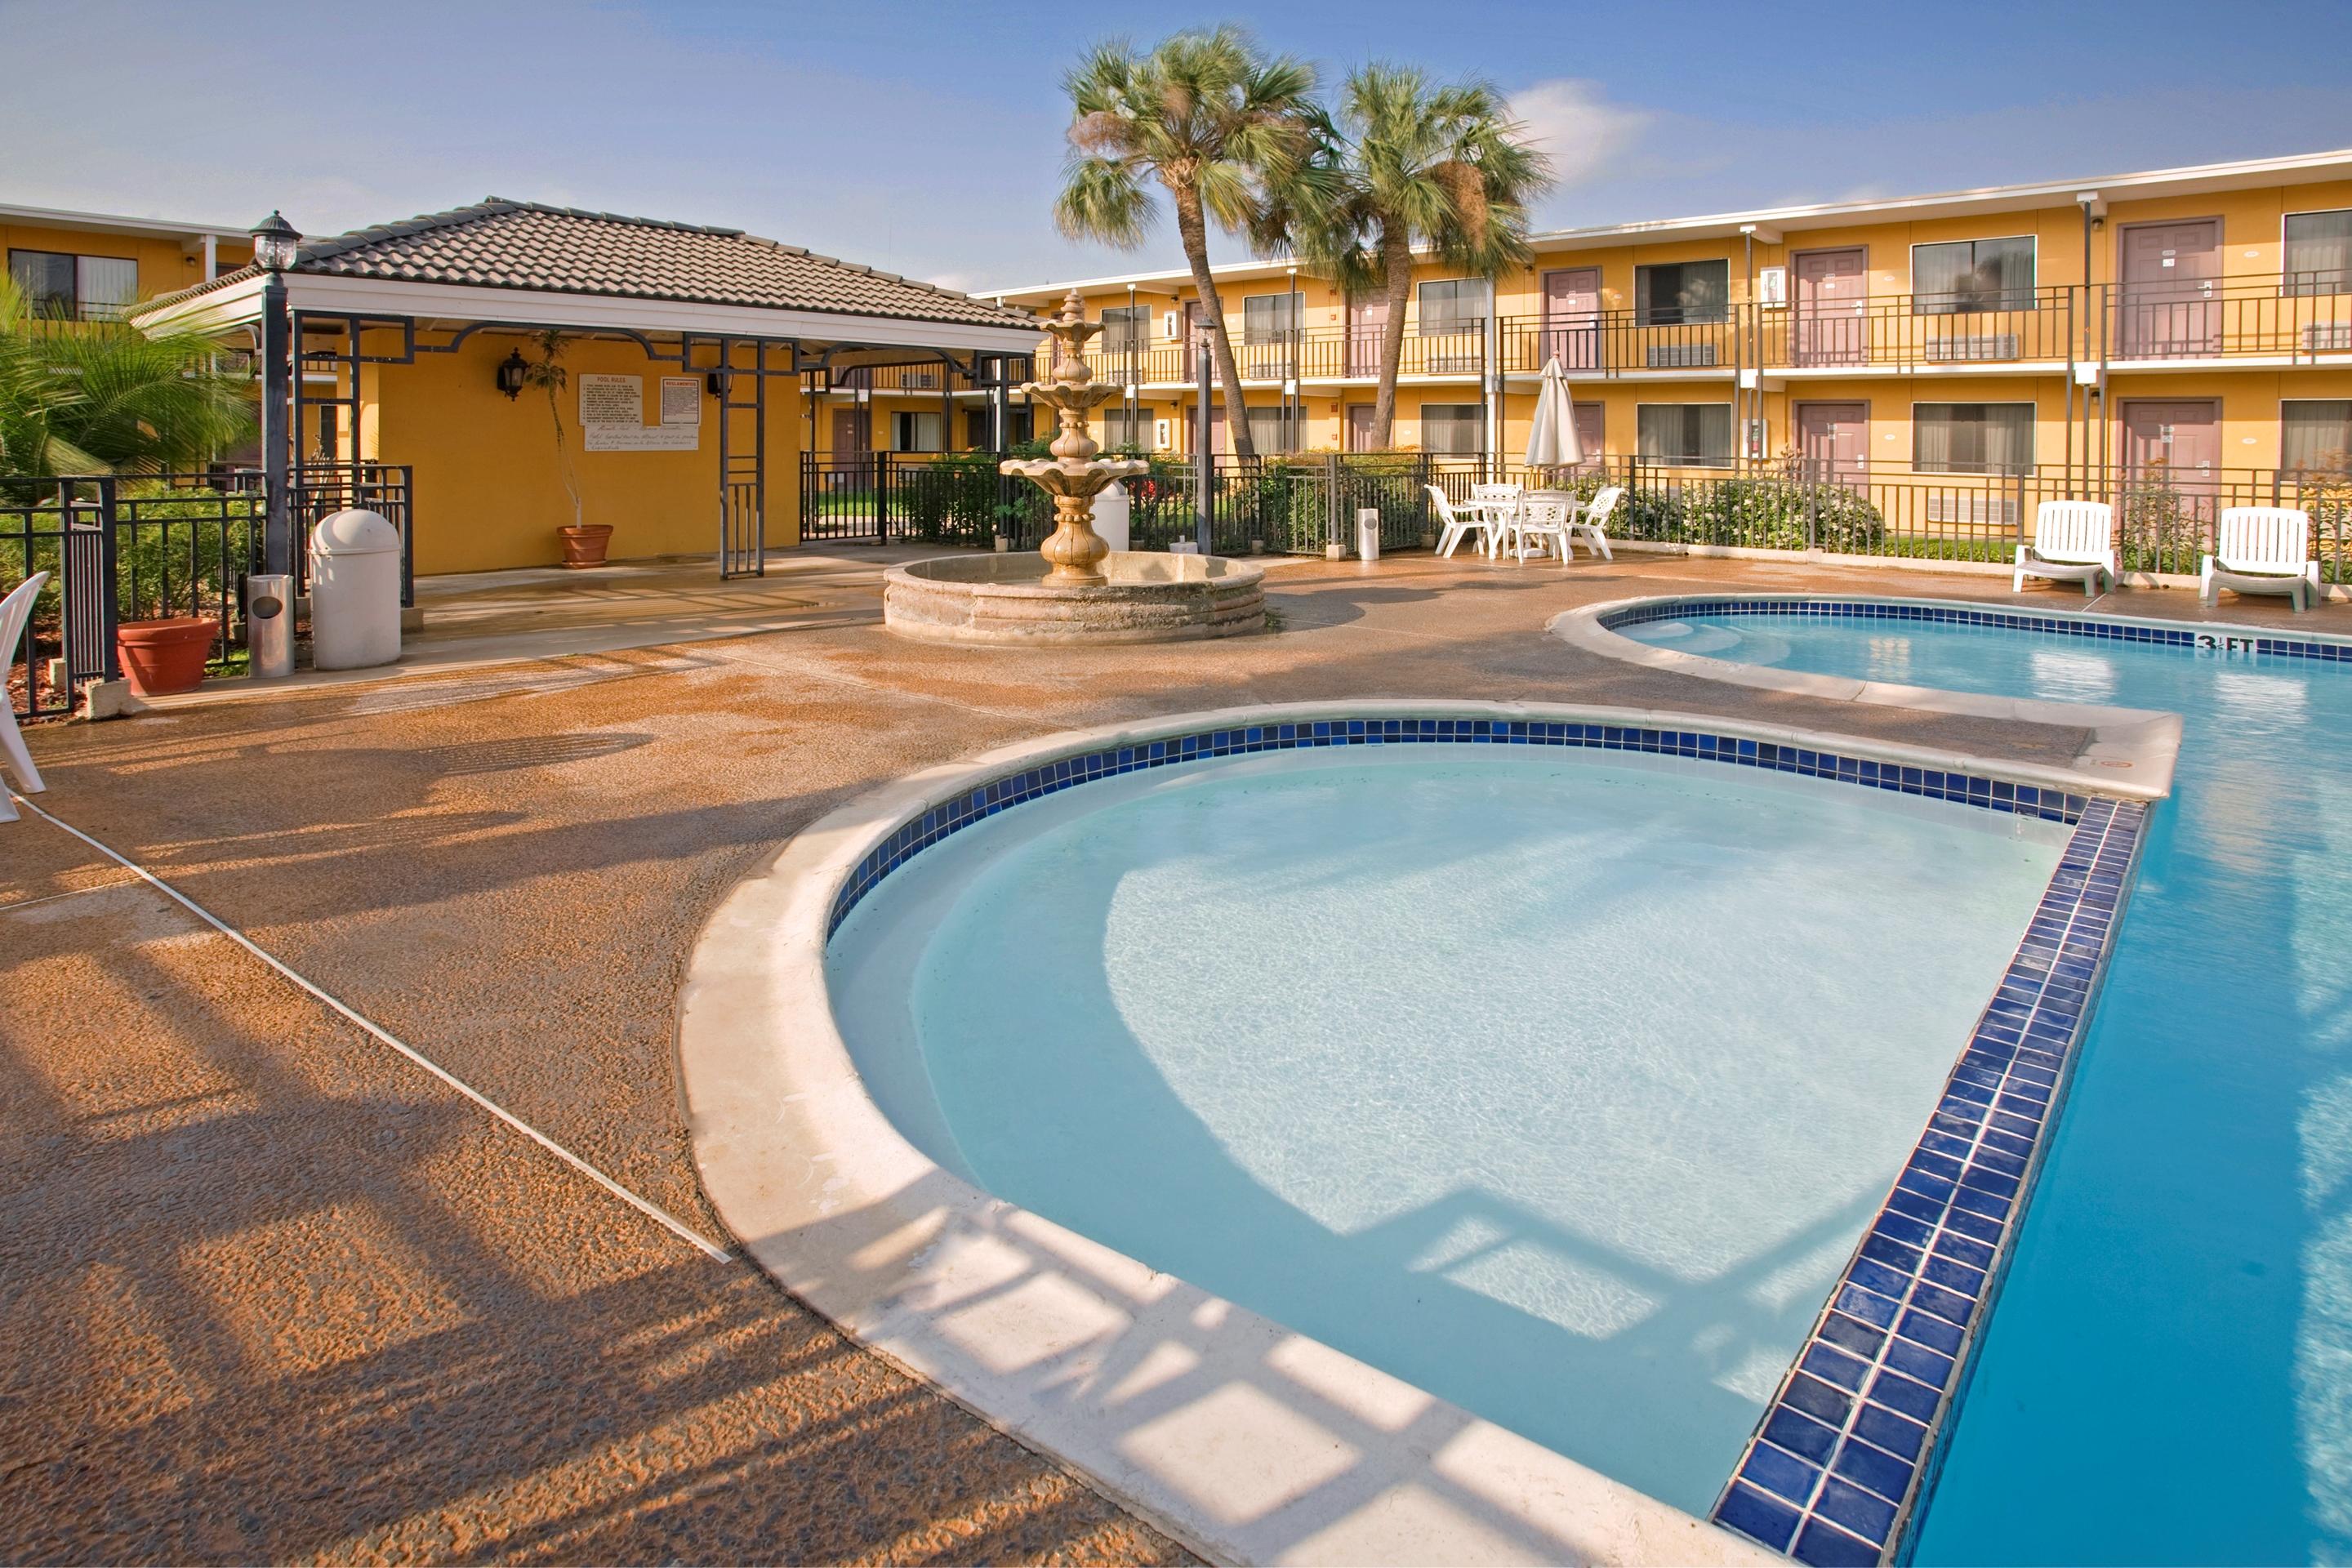 Hotels in Laredo, TX – Choice Hotels